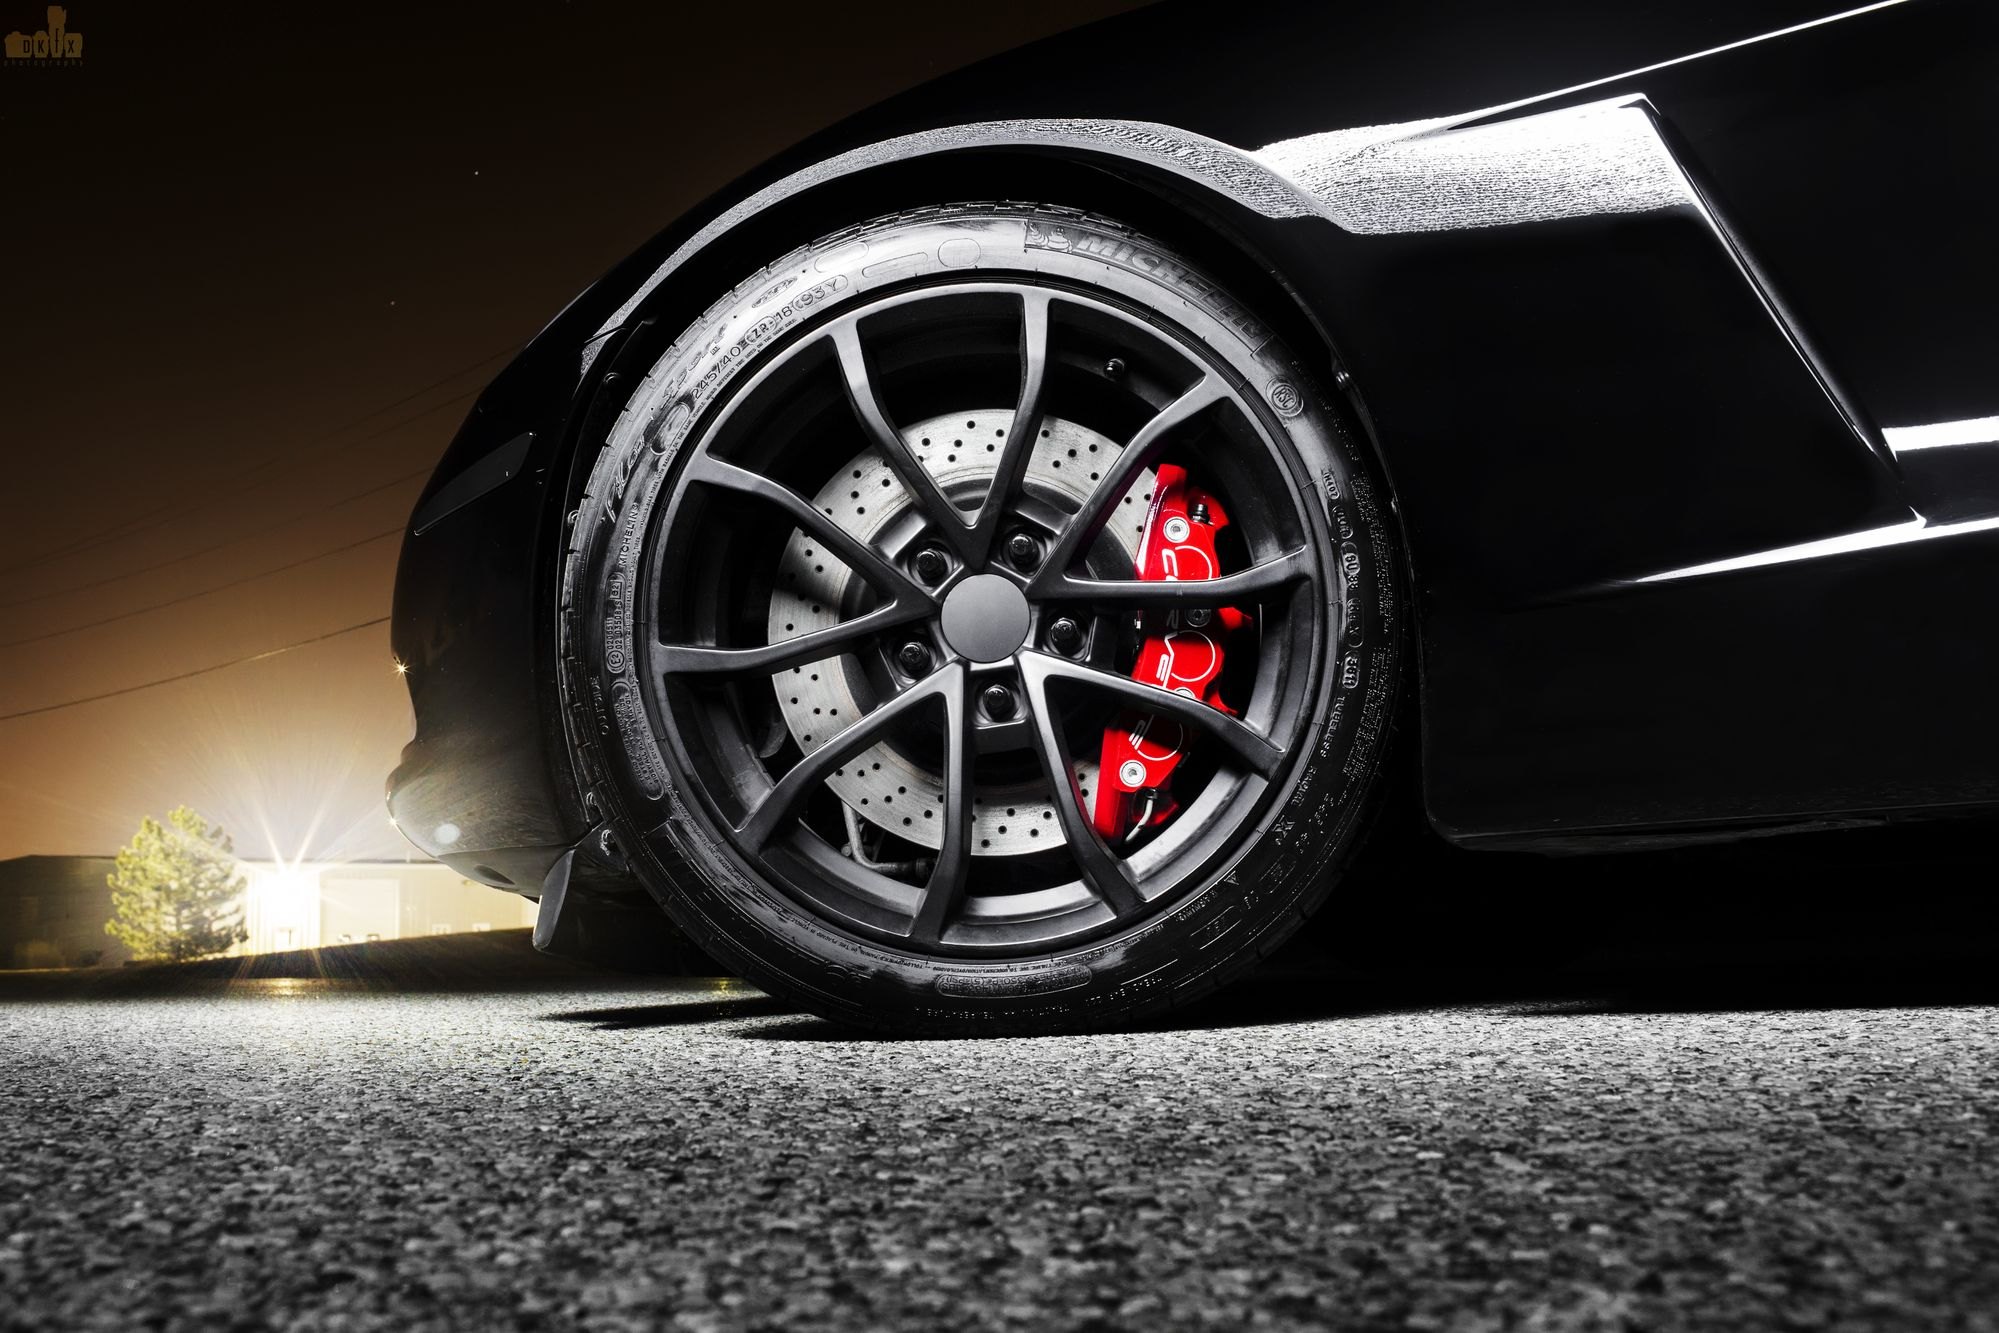 Black Chevy Corvette with Custom Wheels - Photo by dan kinzie